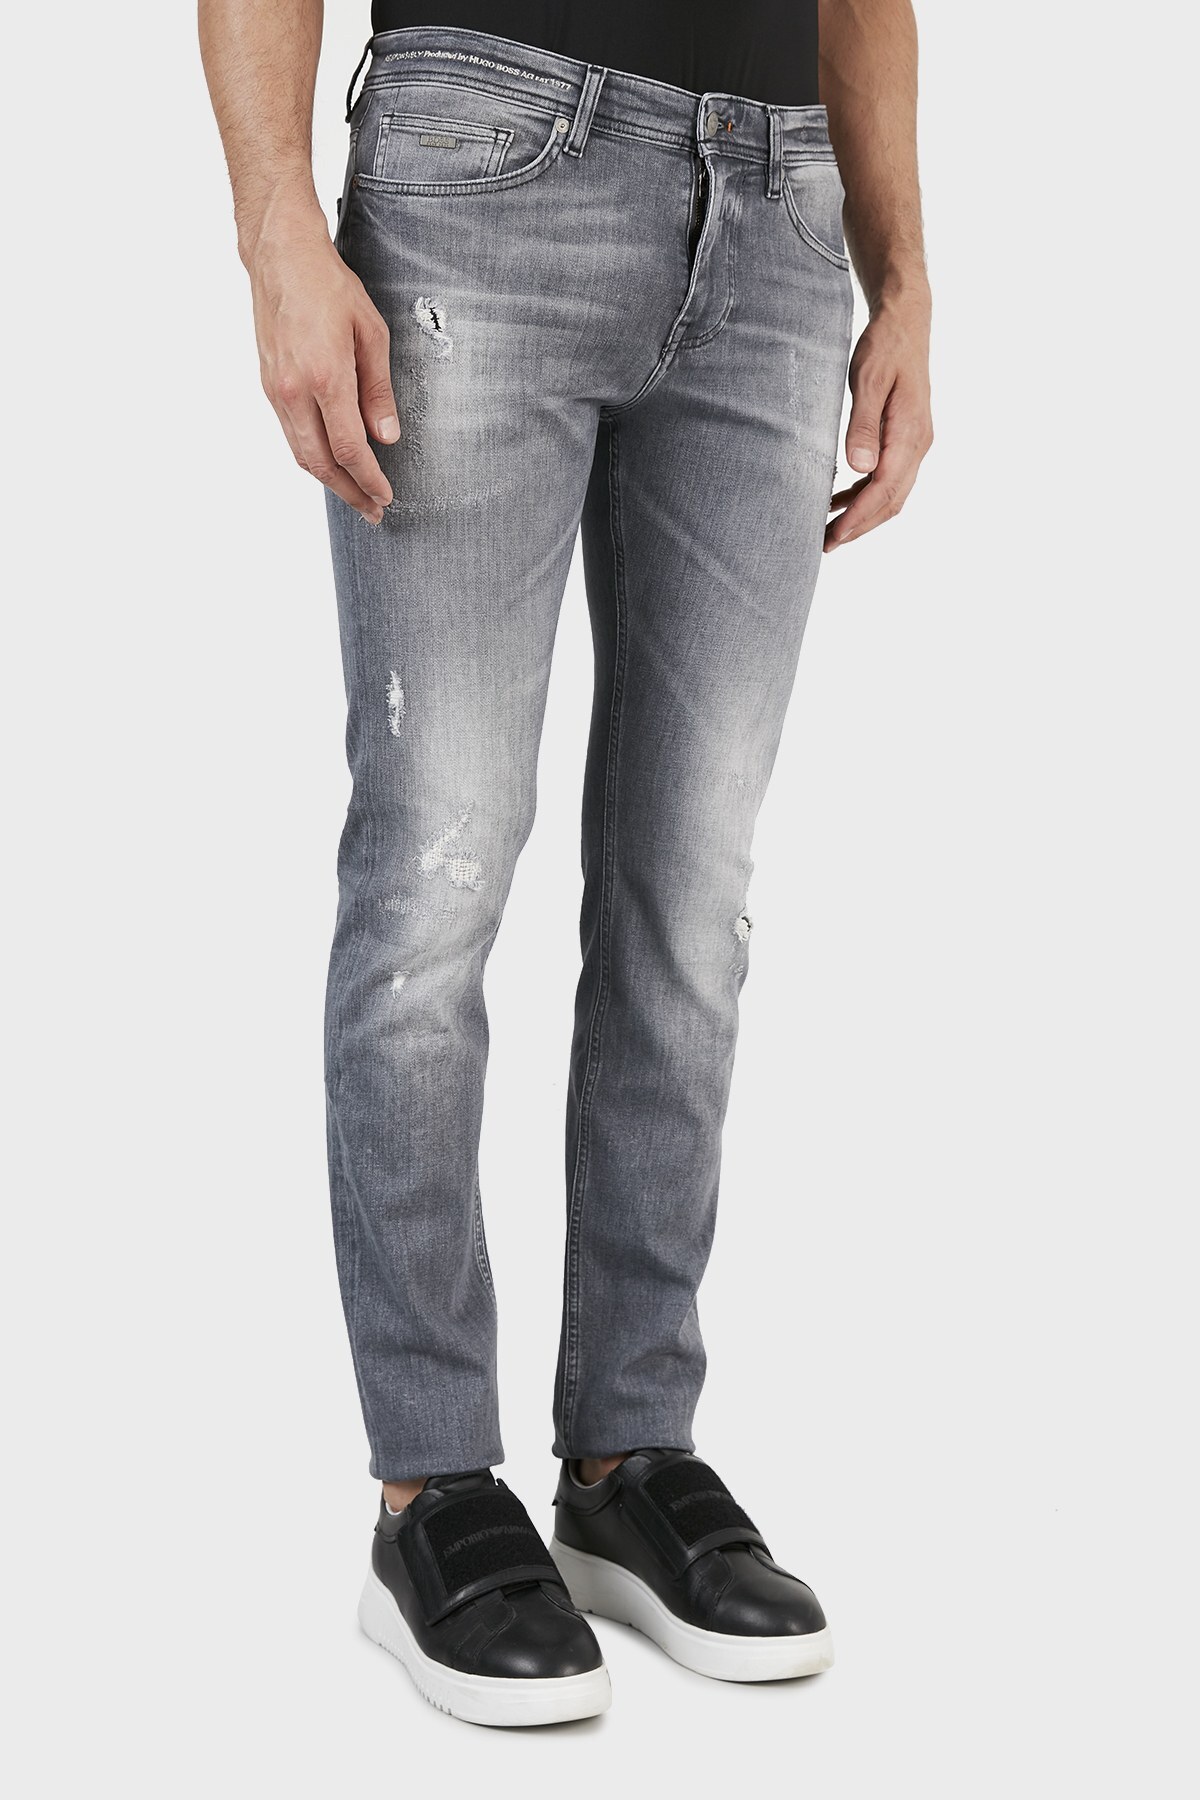 Hugo Boss Slim Fit Cepli Pamuklu Jeans Erkek Kot Pantolon 50453292 033 GRİ